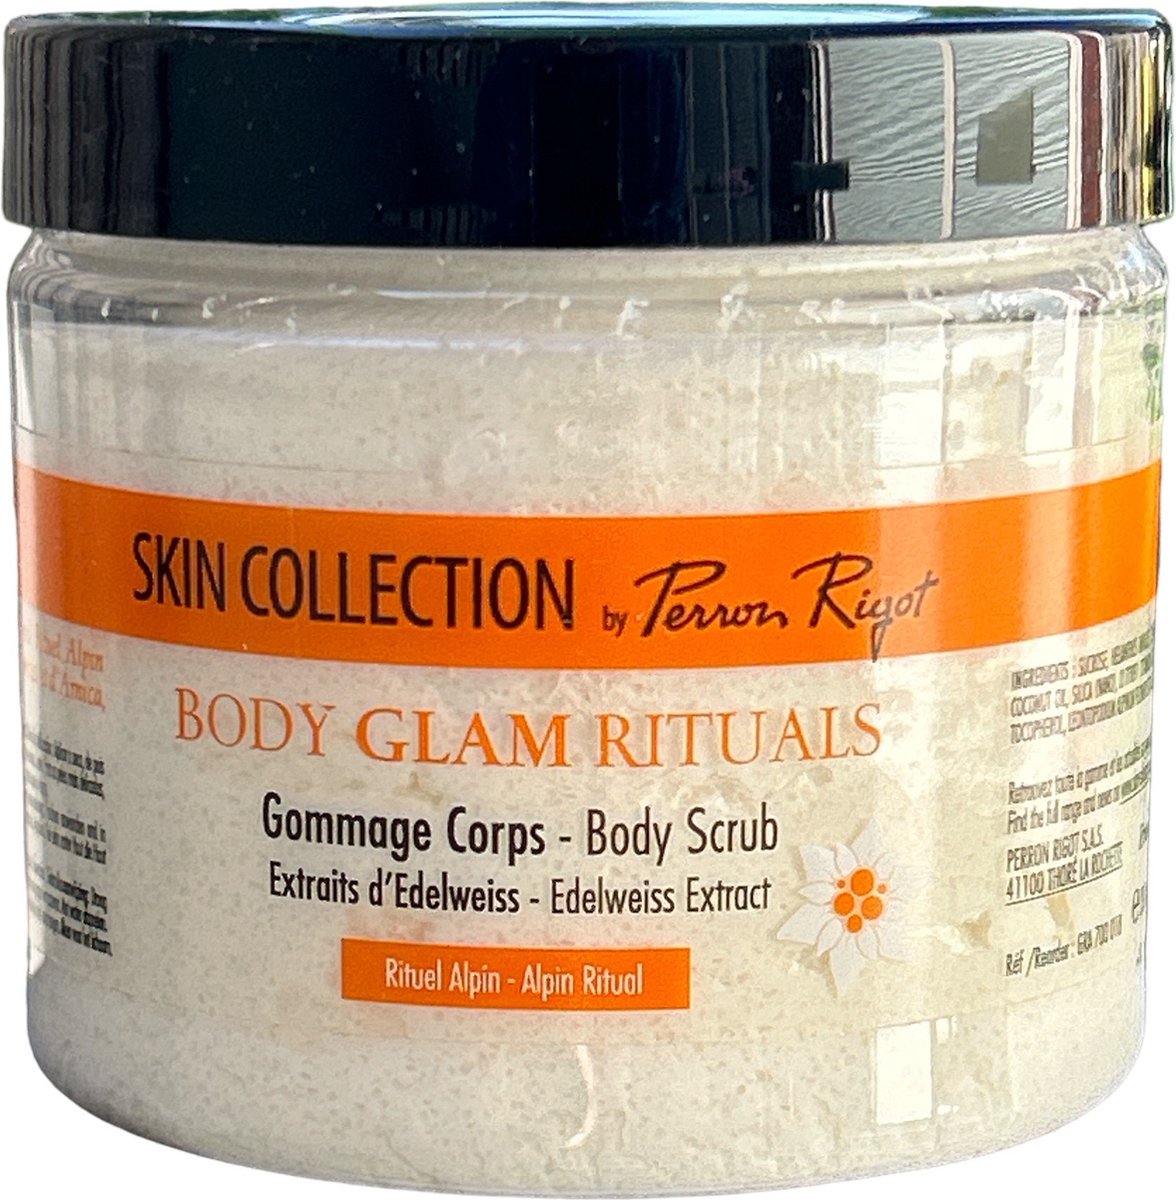 Perron Rigot Skin Collection Body Glam Rituals Body Scrub Edelweiss Extract 200ml